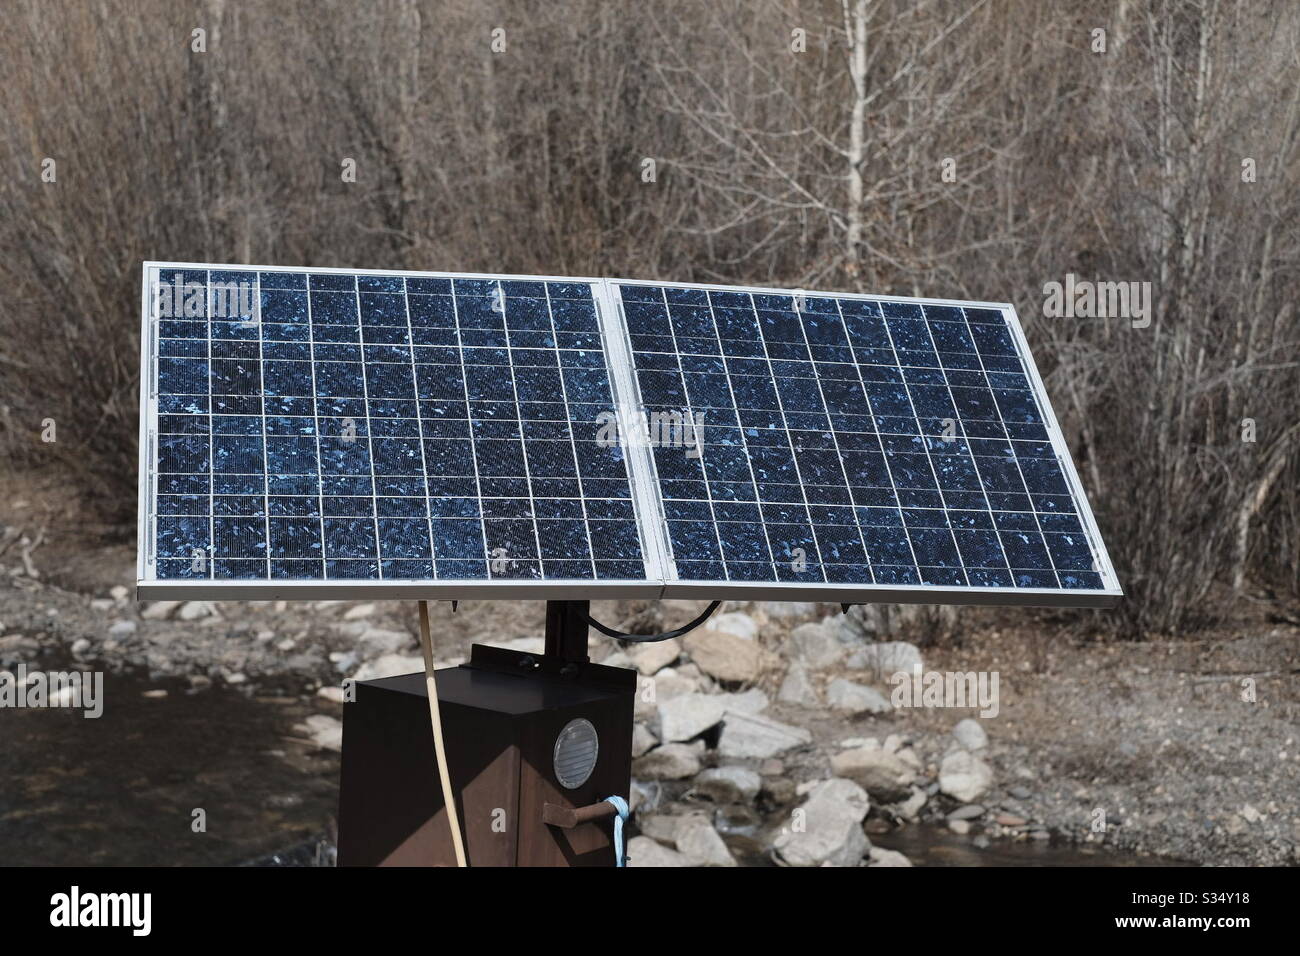 Solar panel in remote location powering stream flow equipment Stock Photo